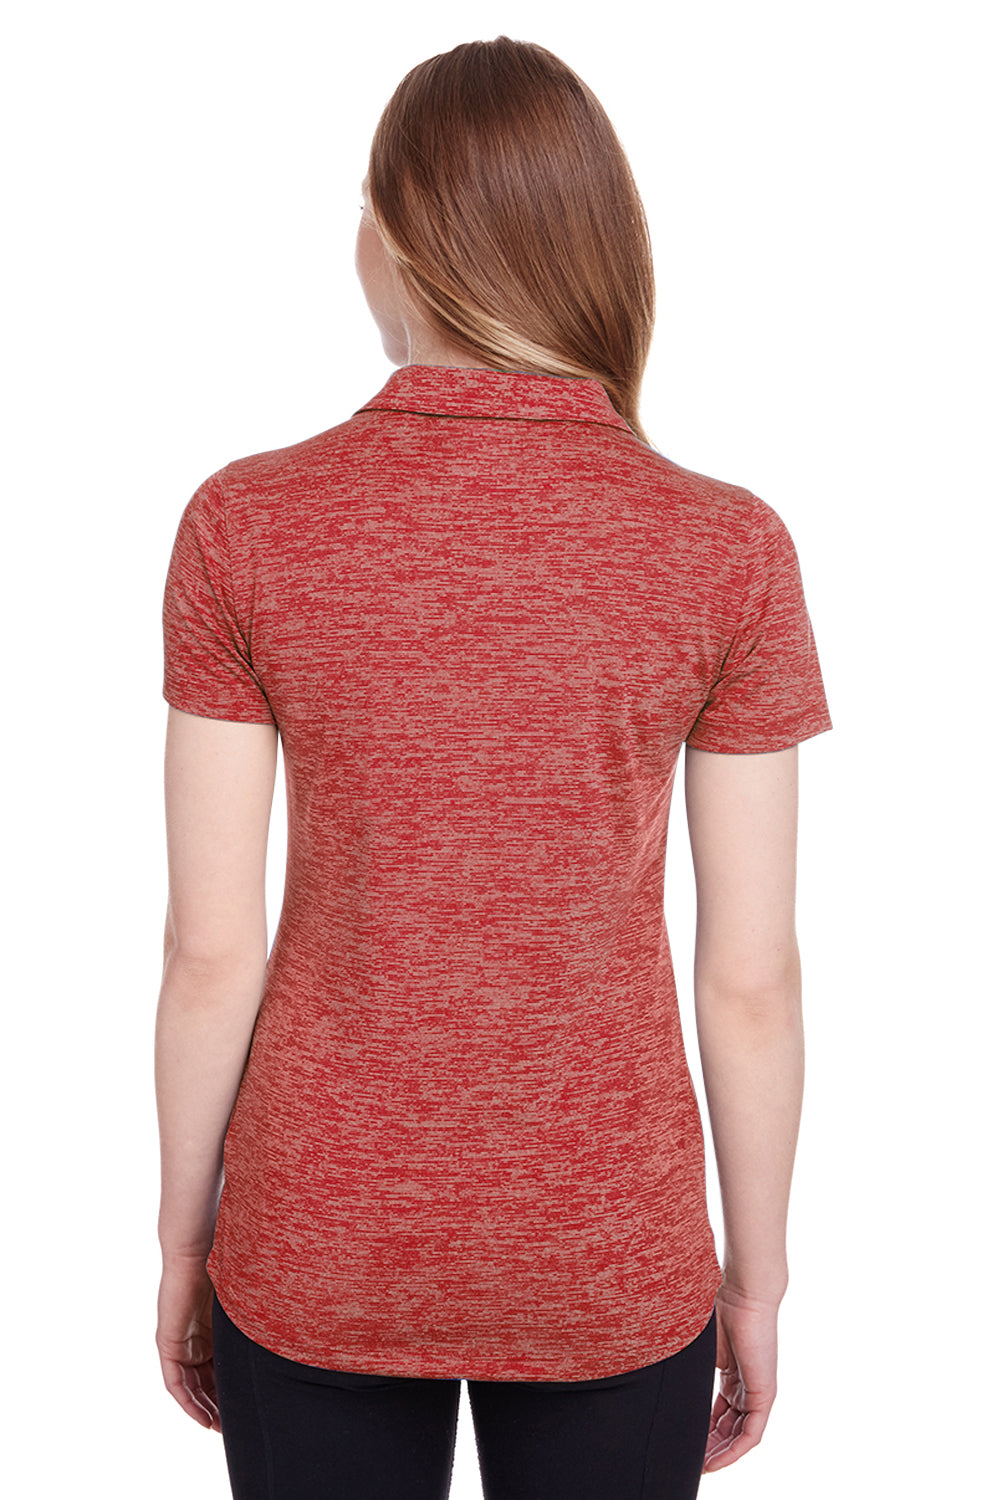 Puma 596802 Womens Icon Performance Moisture Wicking Short Sleeve Polo Shirt Red Back